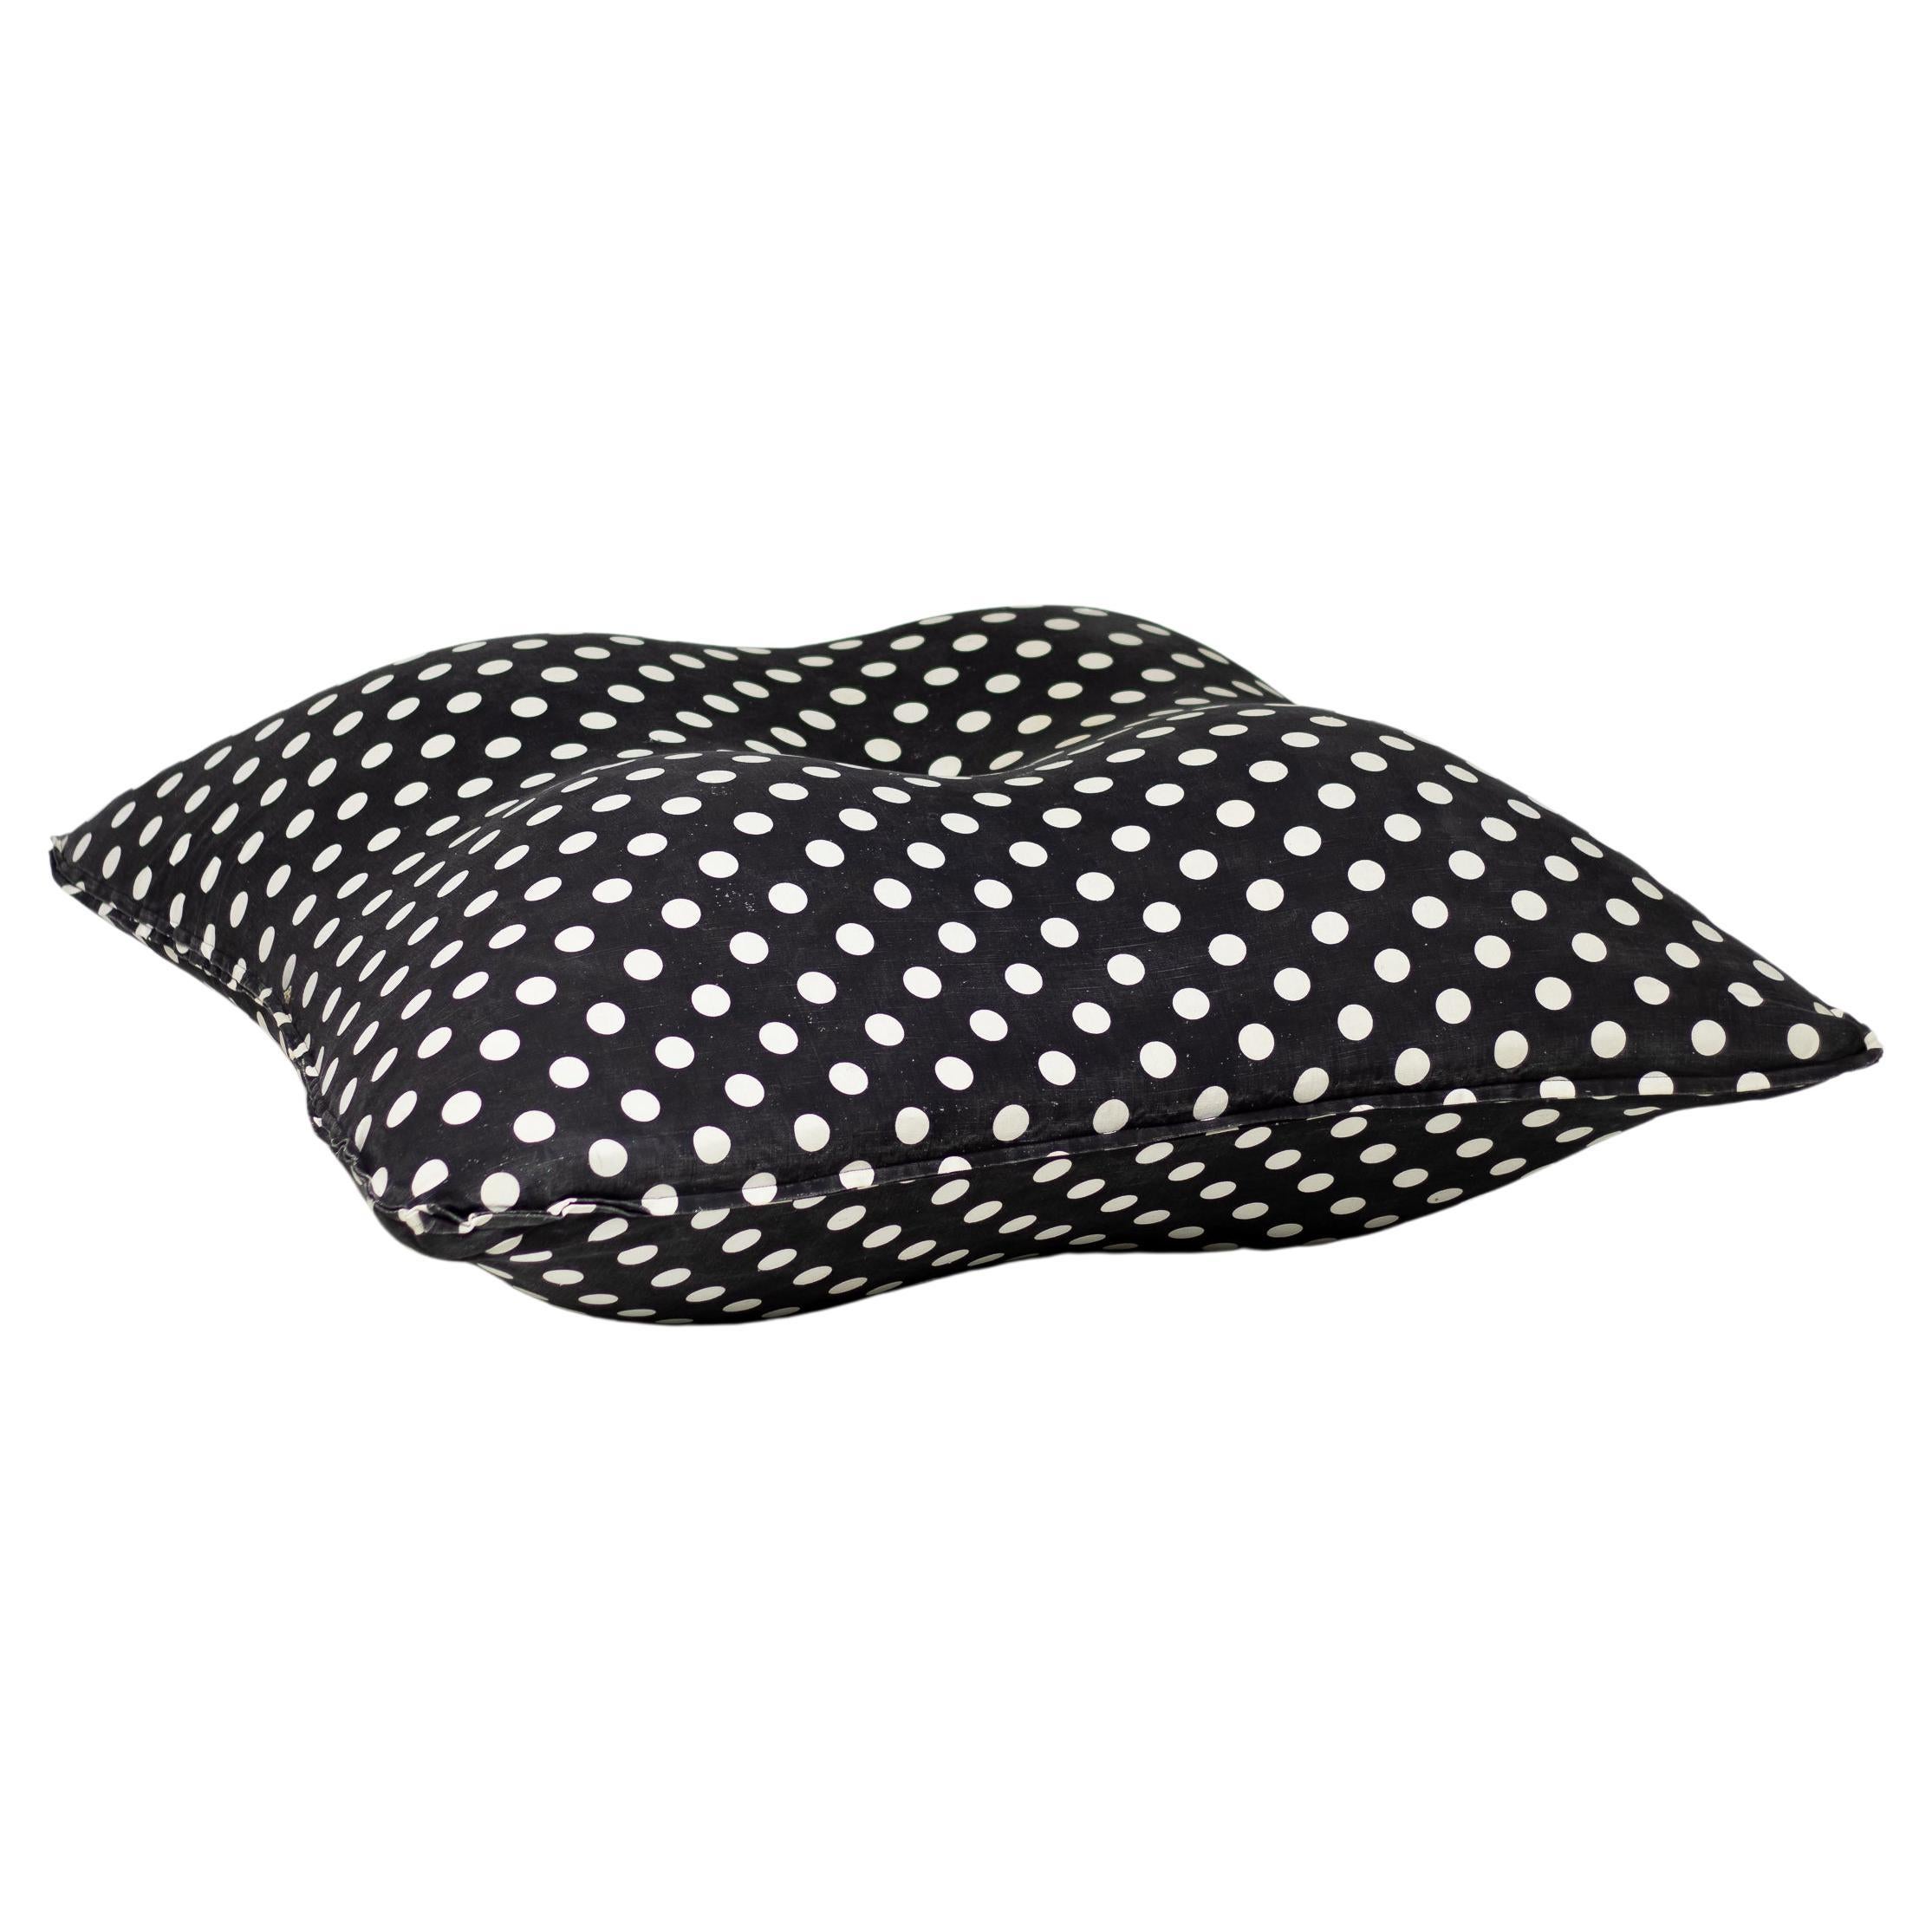 Gufram Giant Polka Dot Cushion For Sale